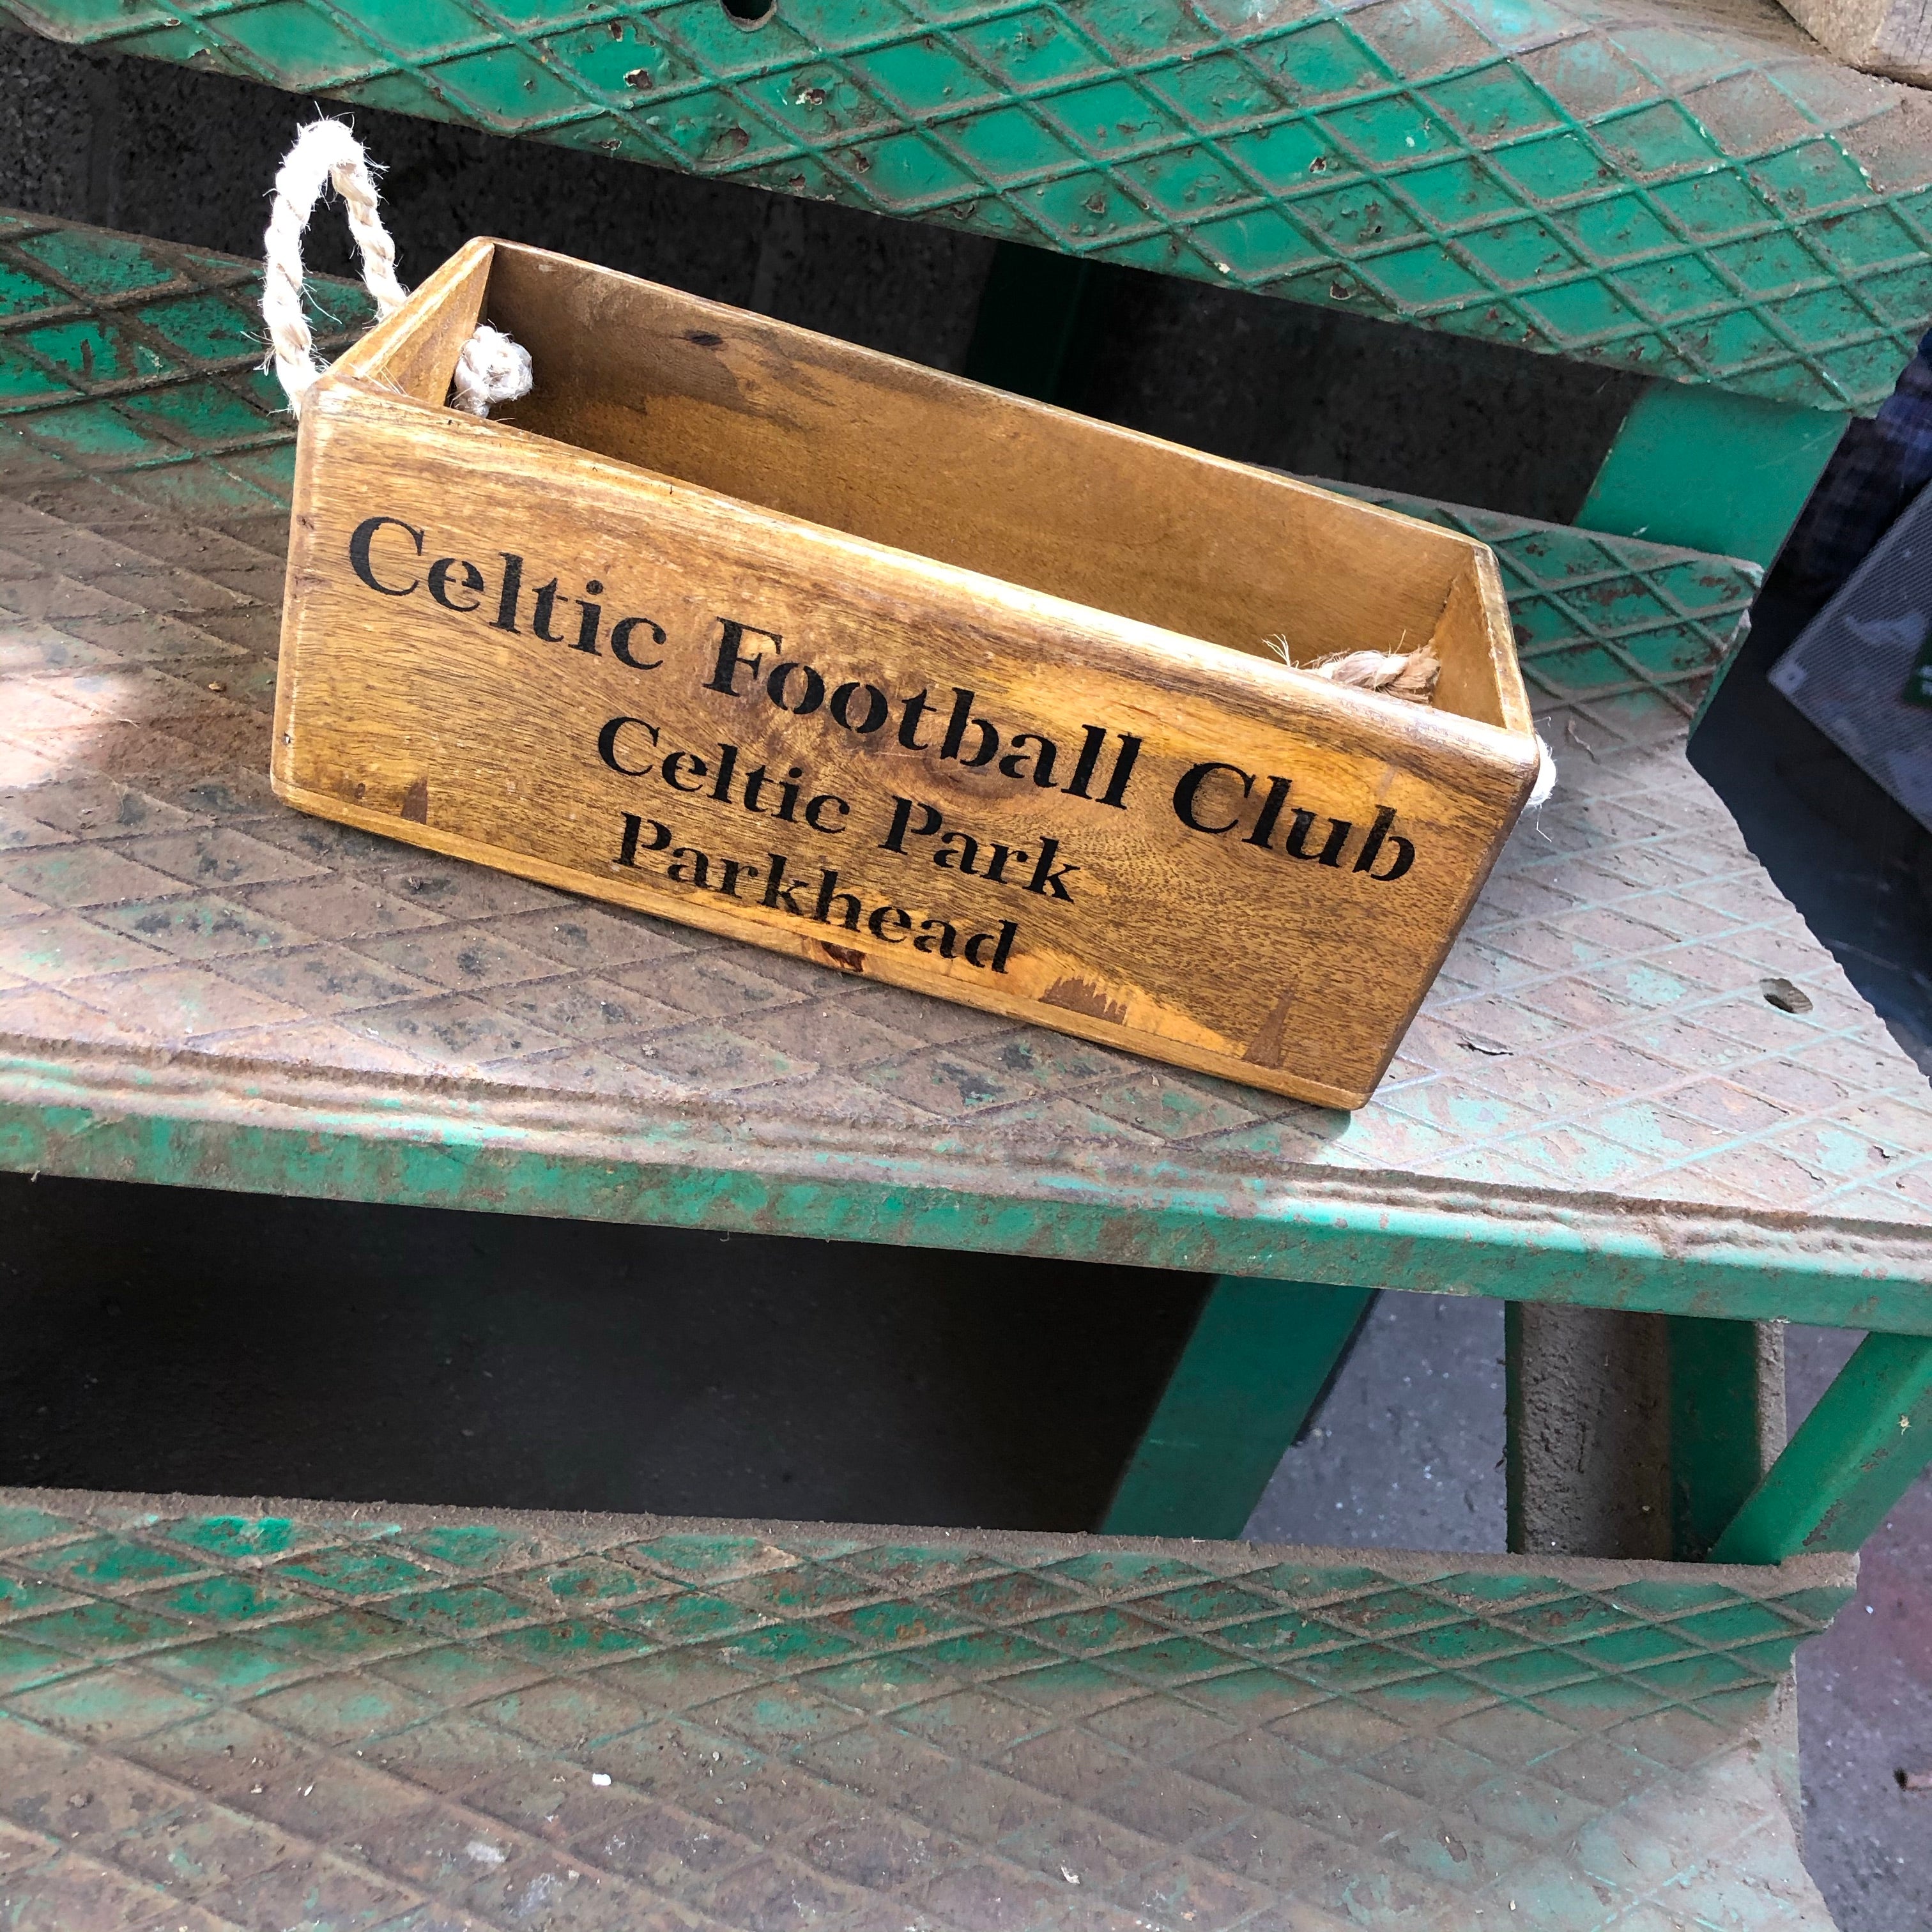 Celtic football club wooden box